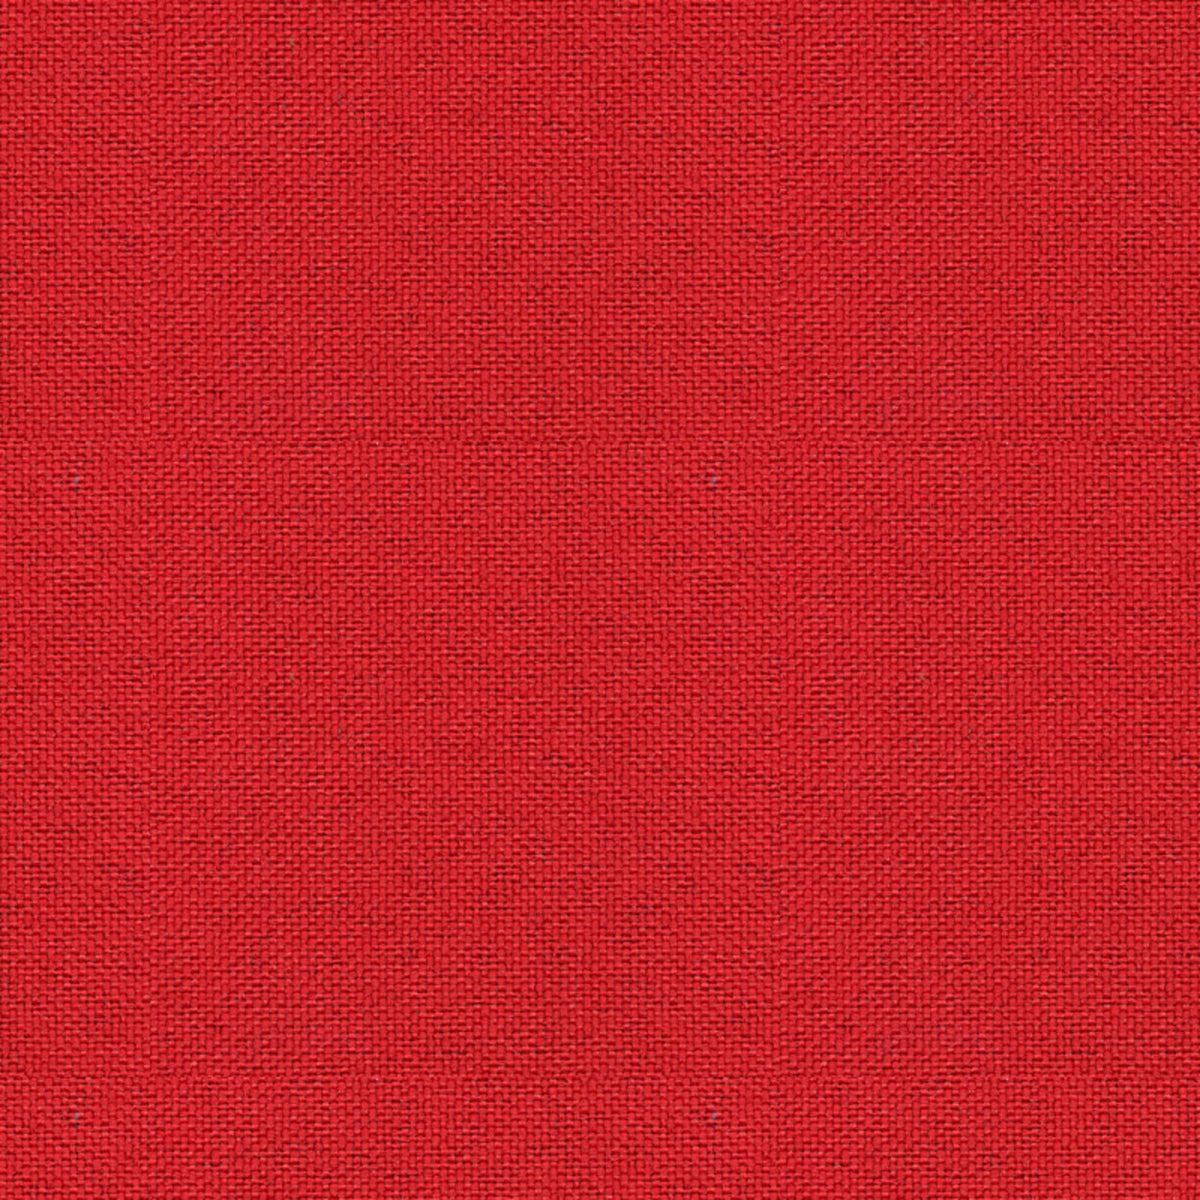 Interweave Scarlet Fabric |#| 